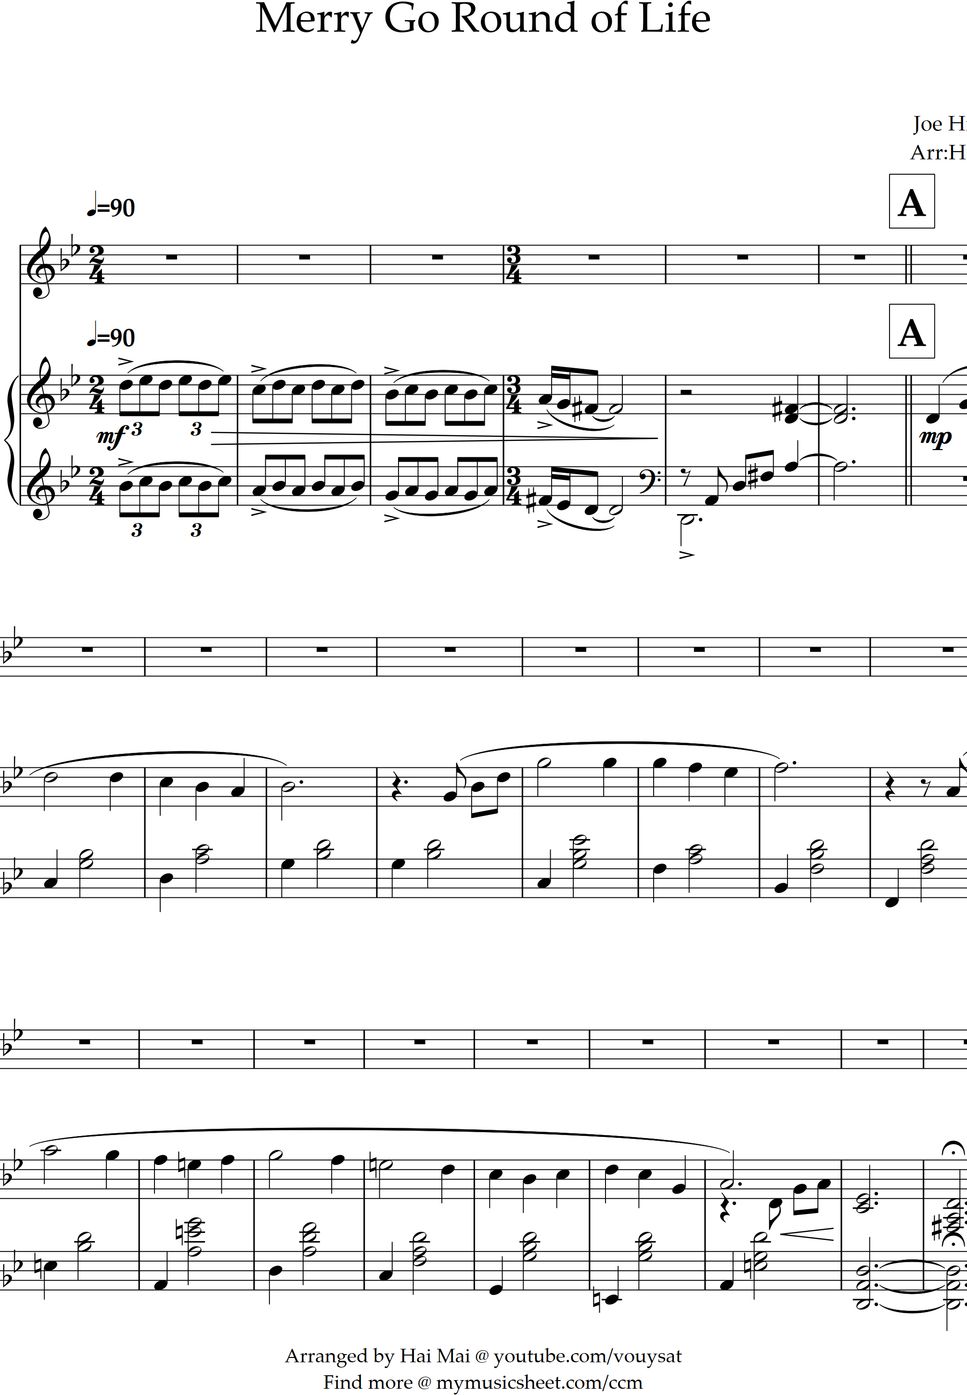 Joe Hisaishi - Merry Go Round of Life for Flute Solo (easy) and Piano Accompaniment by Hai Mai